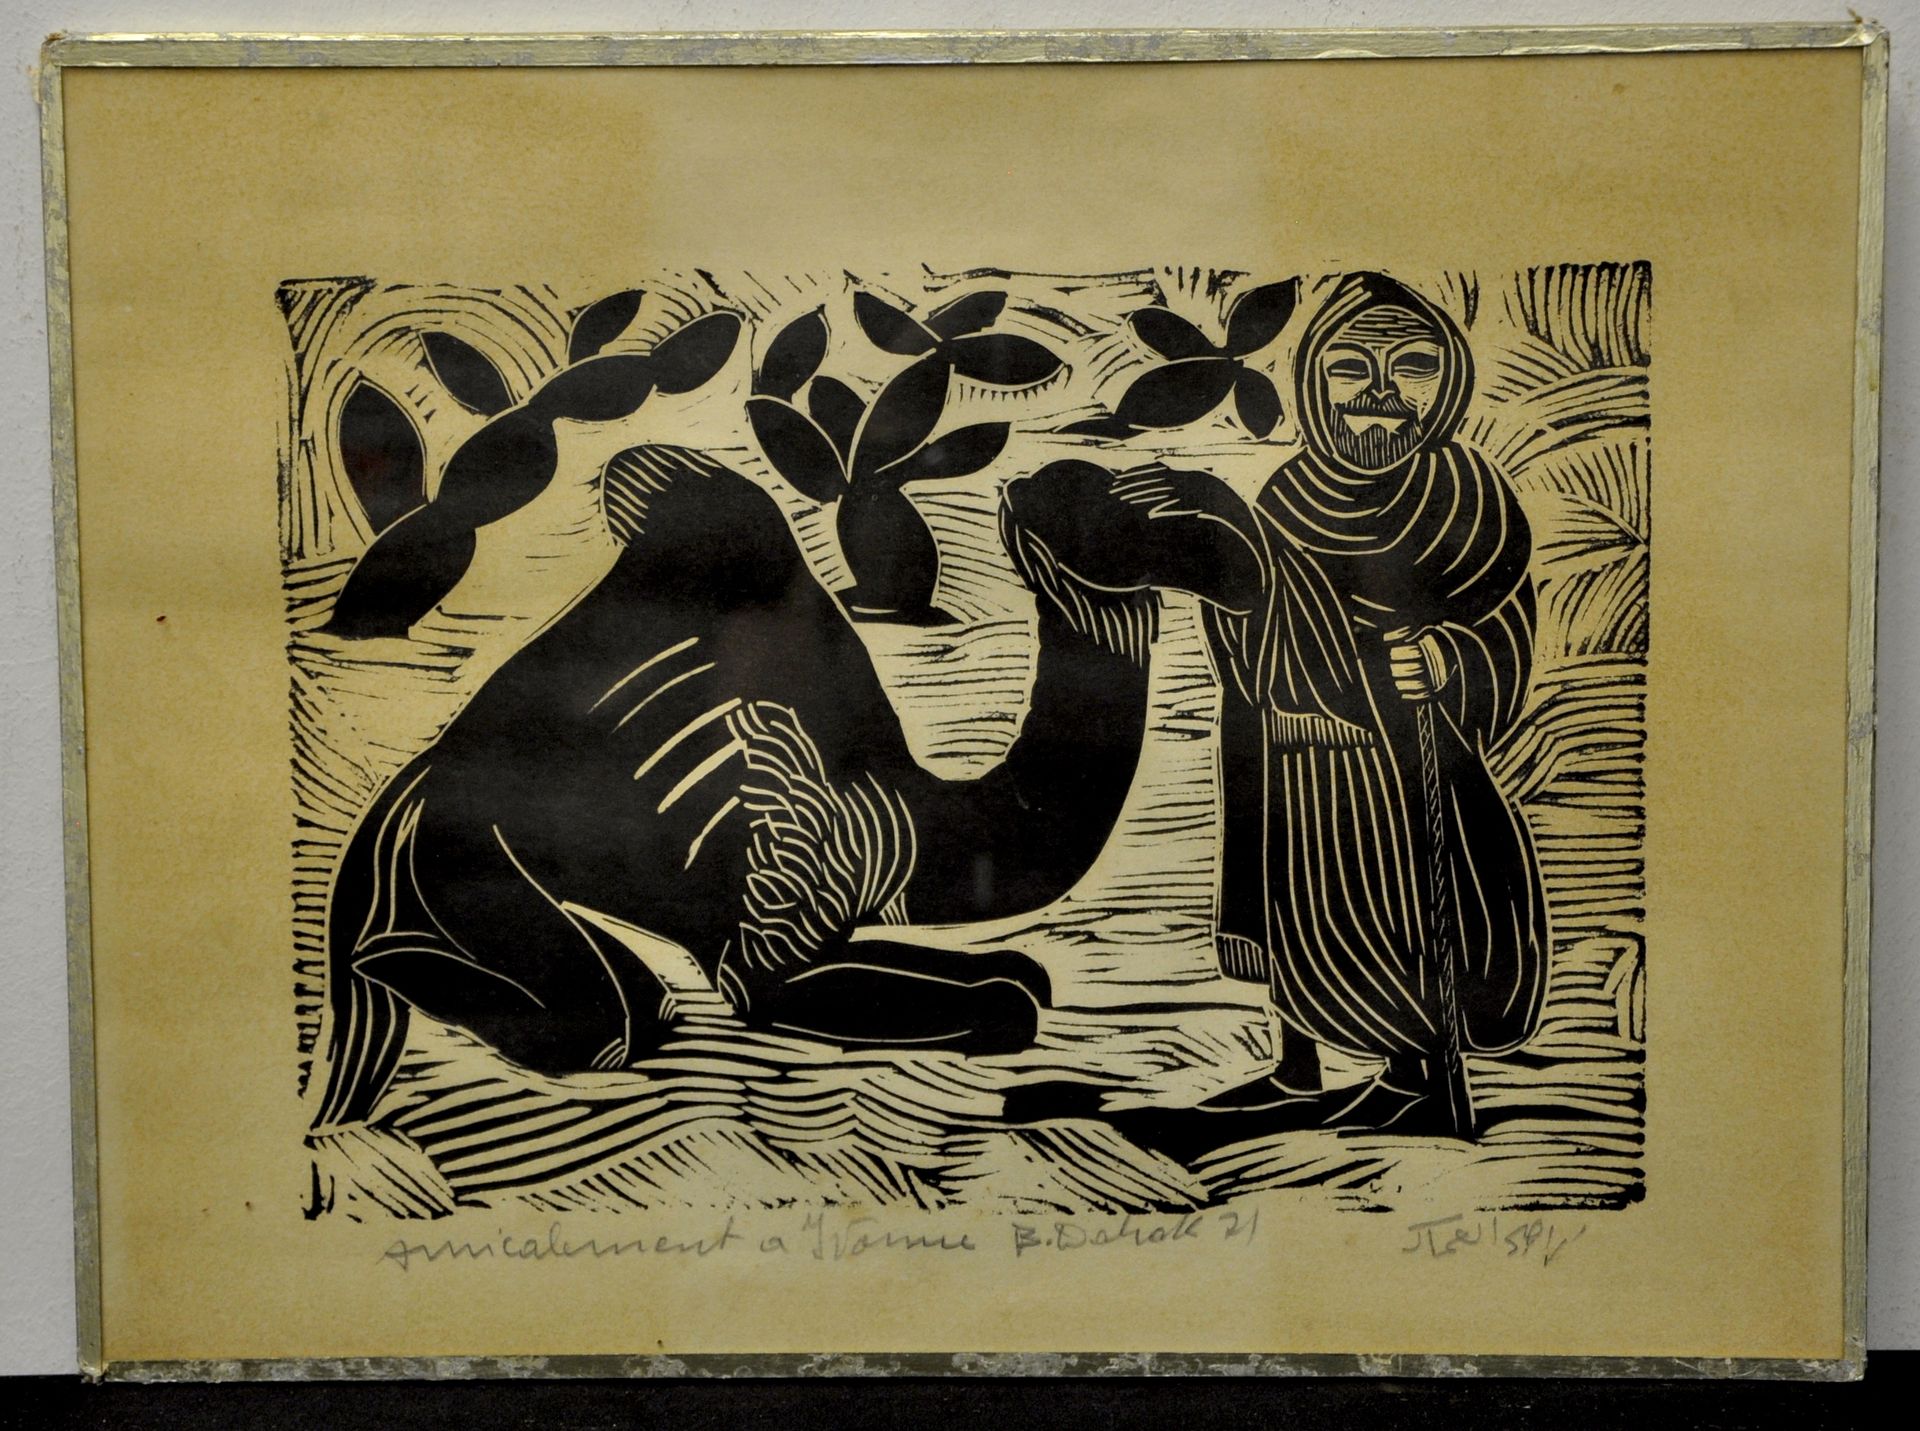 Null 卜拉欣-达哈克(1931-2004)

有单峰驼的人

纸上木刻版画

右下角有签名，左下角有献词。

21 x 30厘米